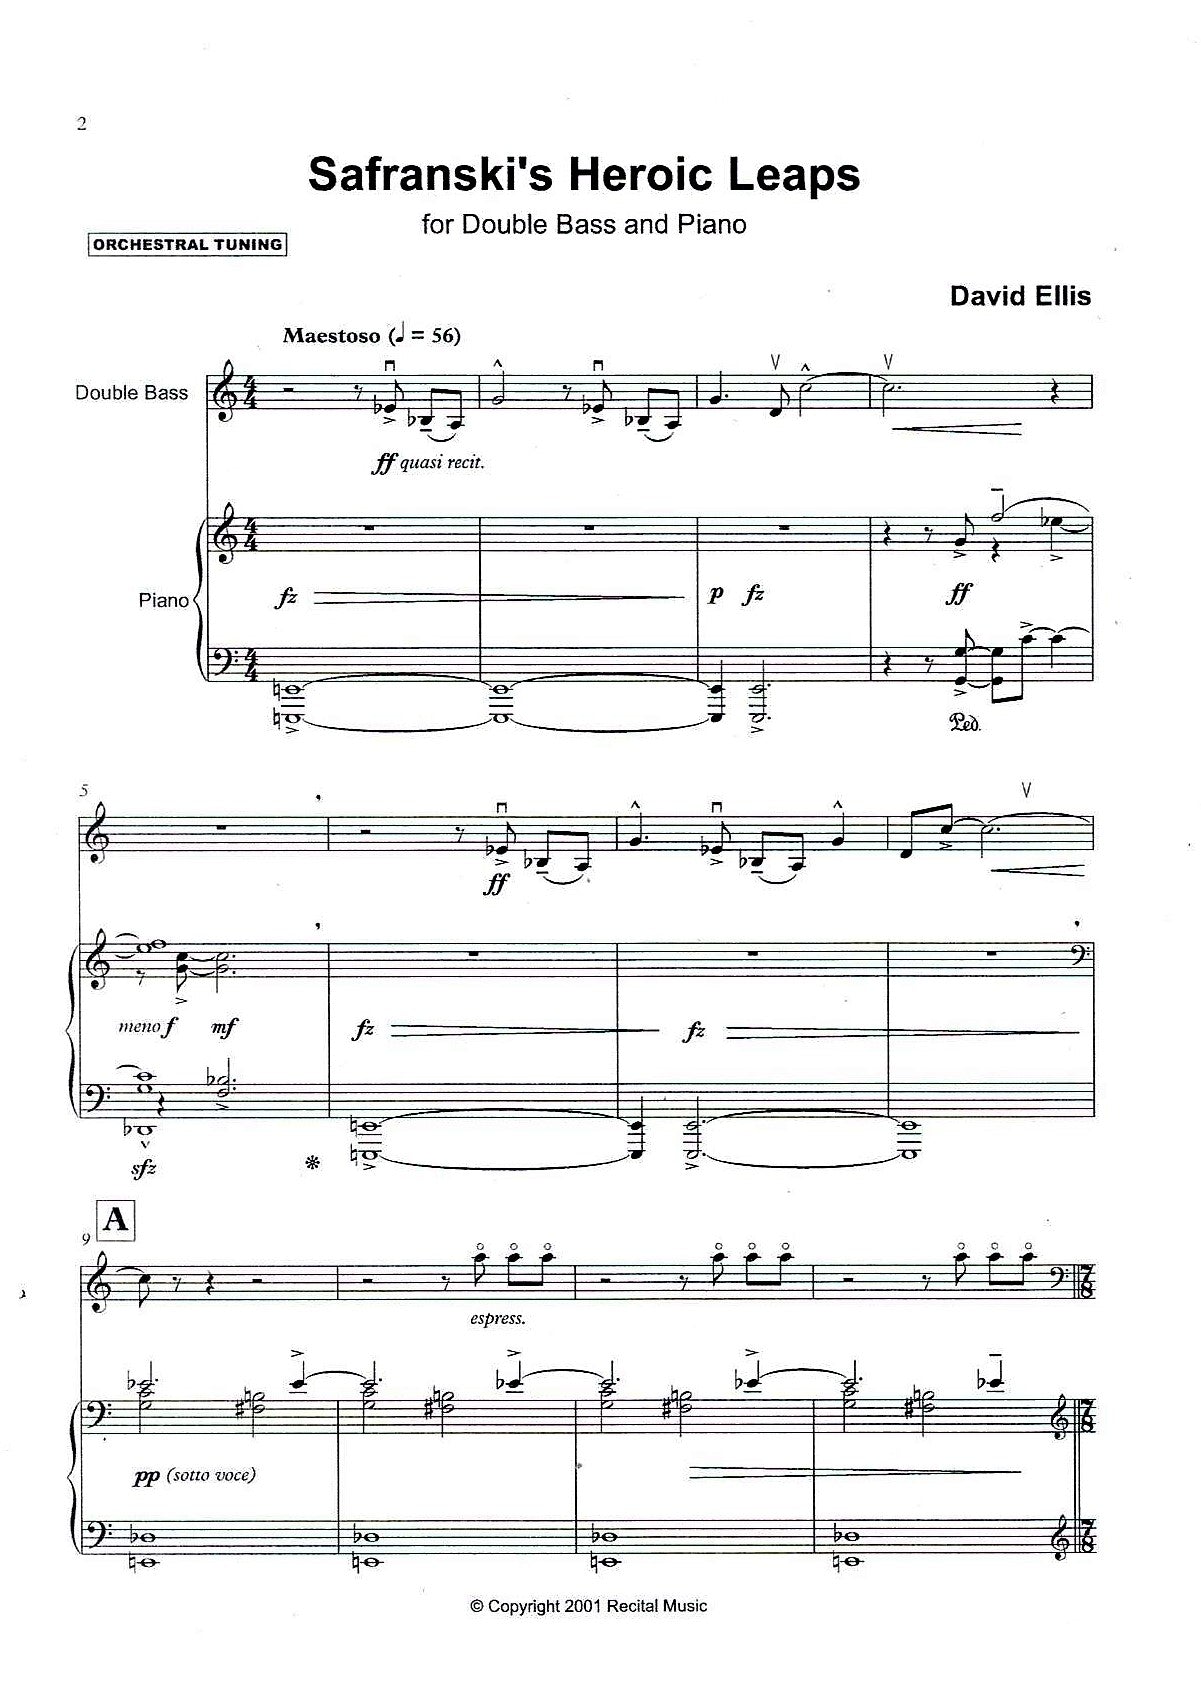 David Ellis: Safranski's Heroic Leaps for double bass & piano